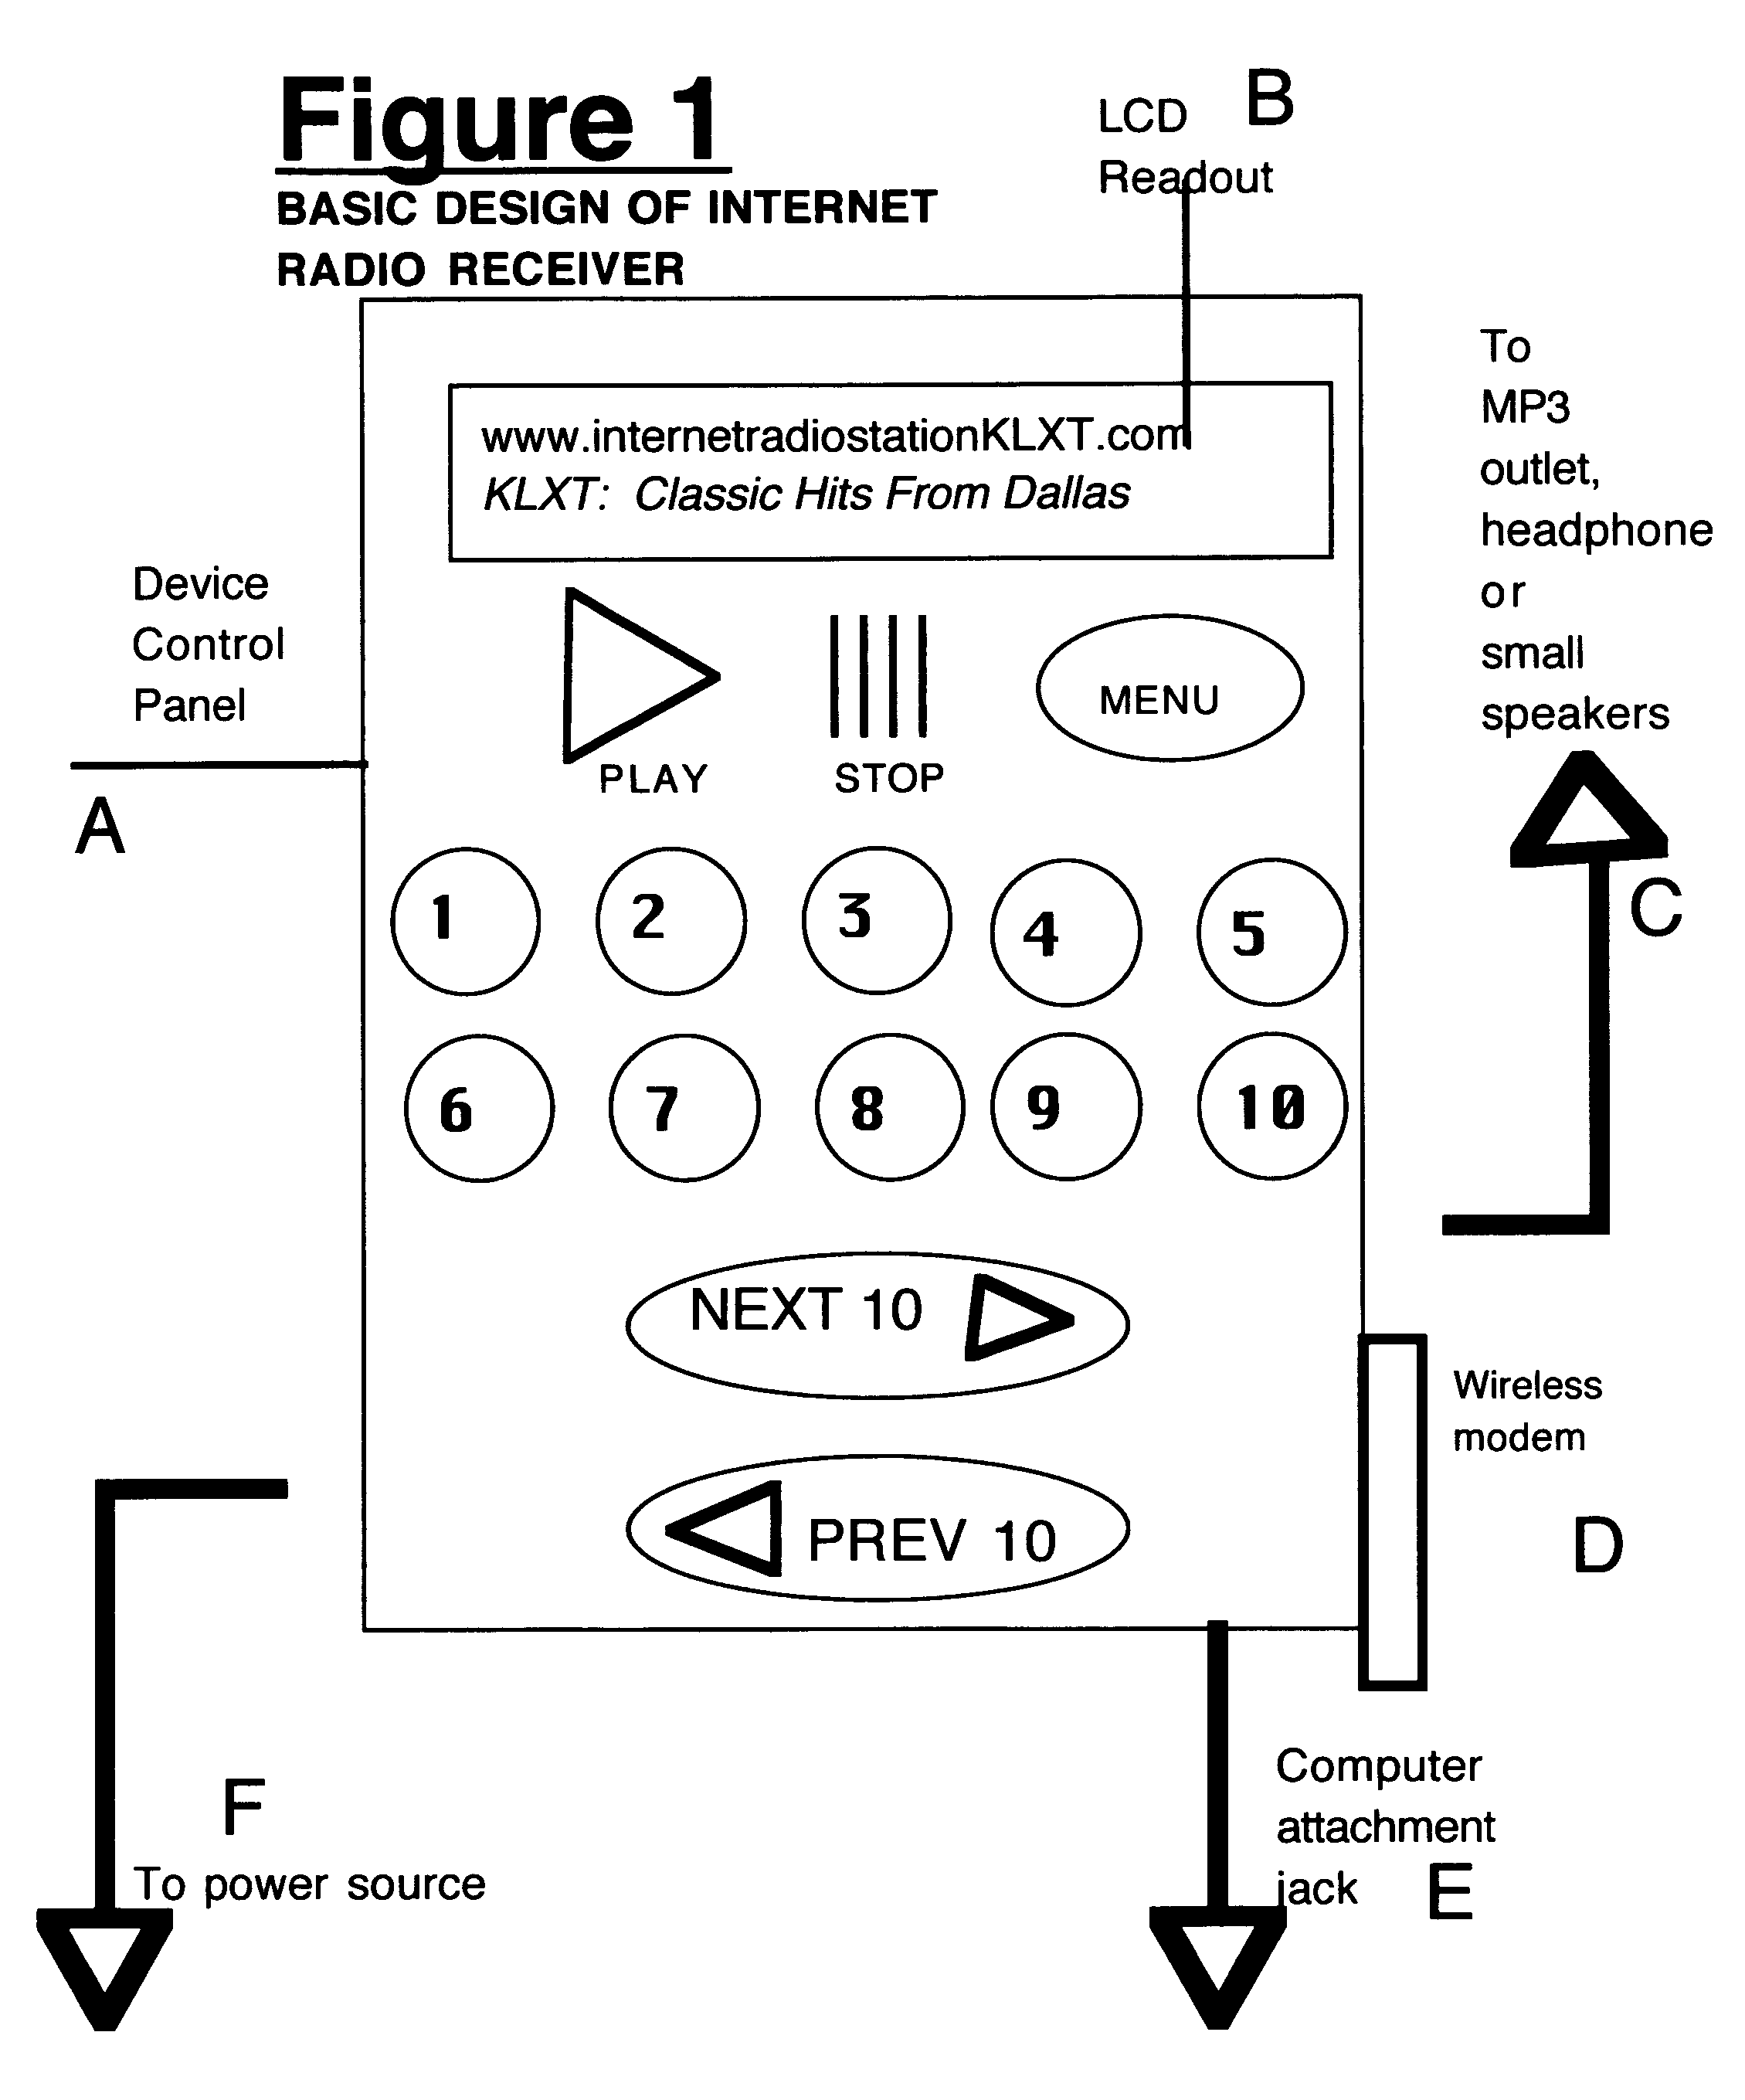 Internet radio receiver